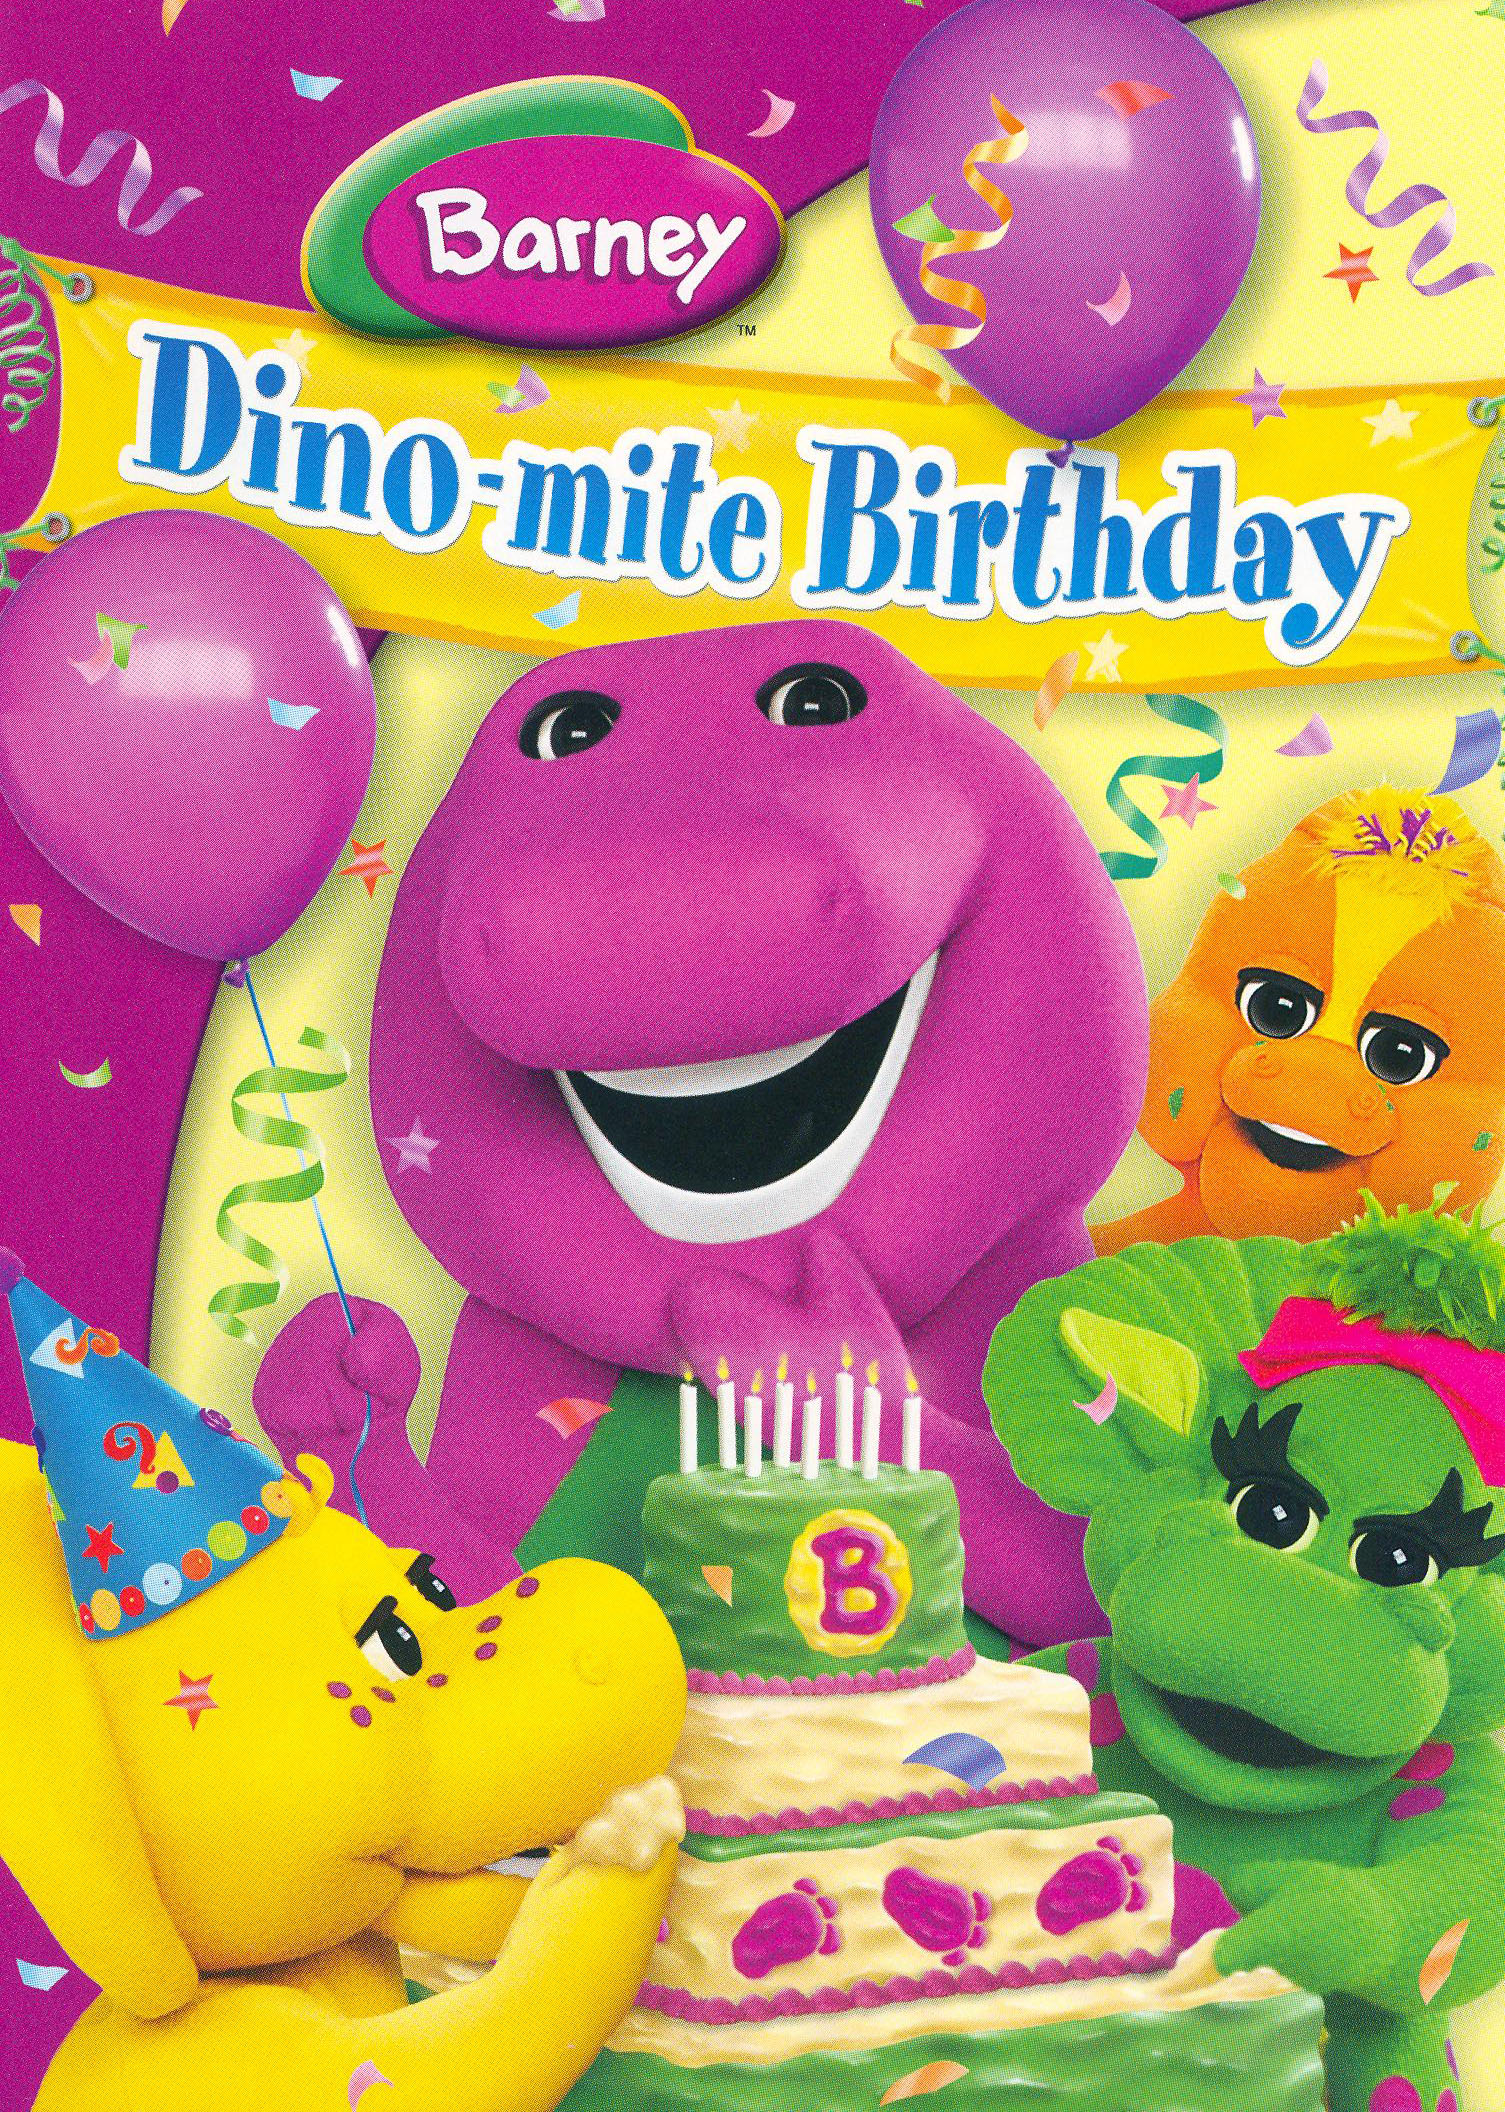 Barney: Dino-Mite Birthday DVD - Best Buy.